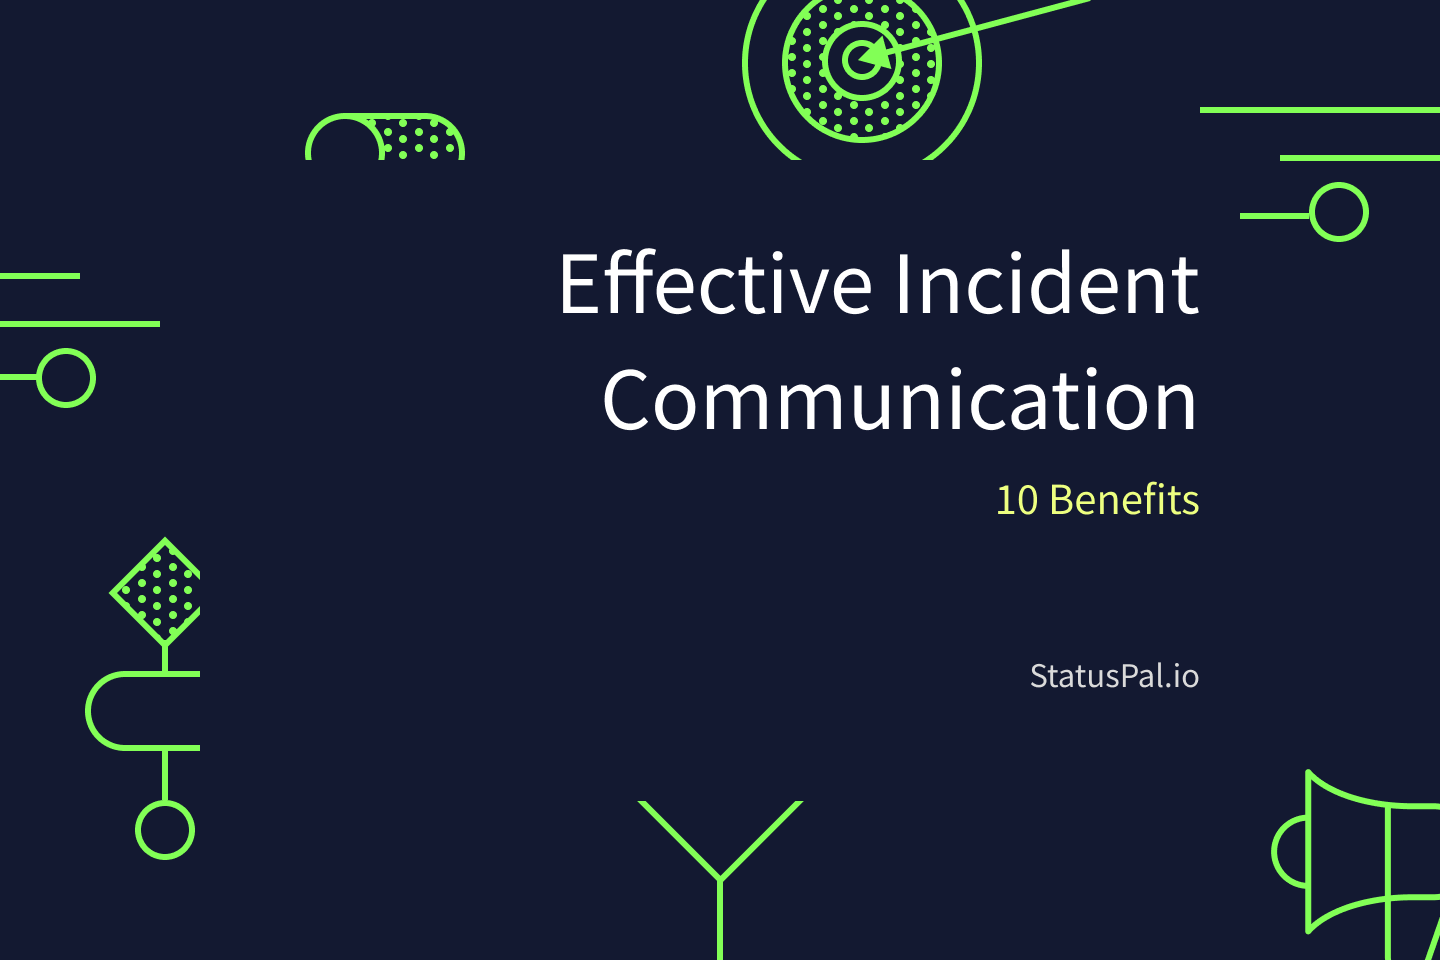 10 Benefits of Effective Incident Communication